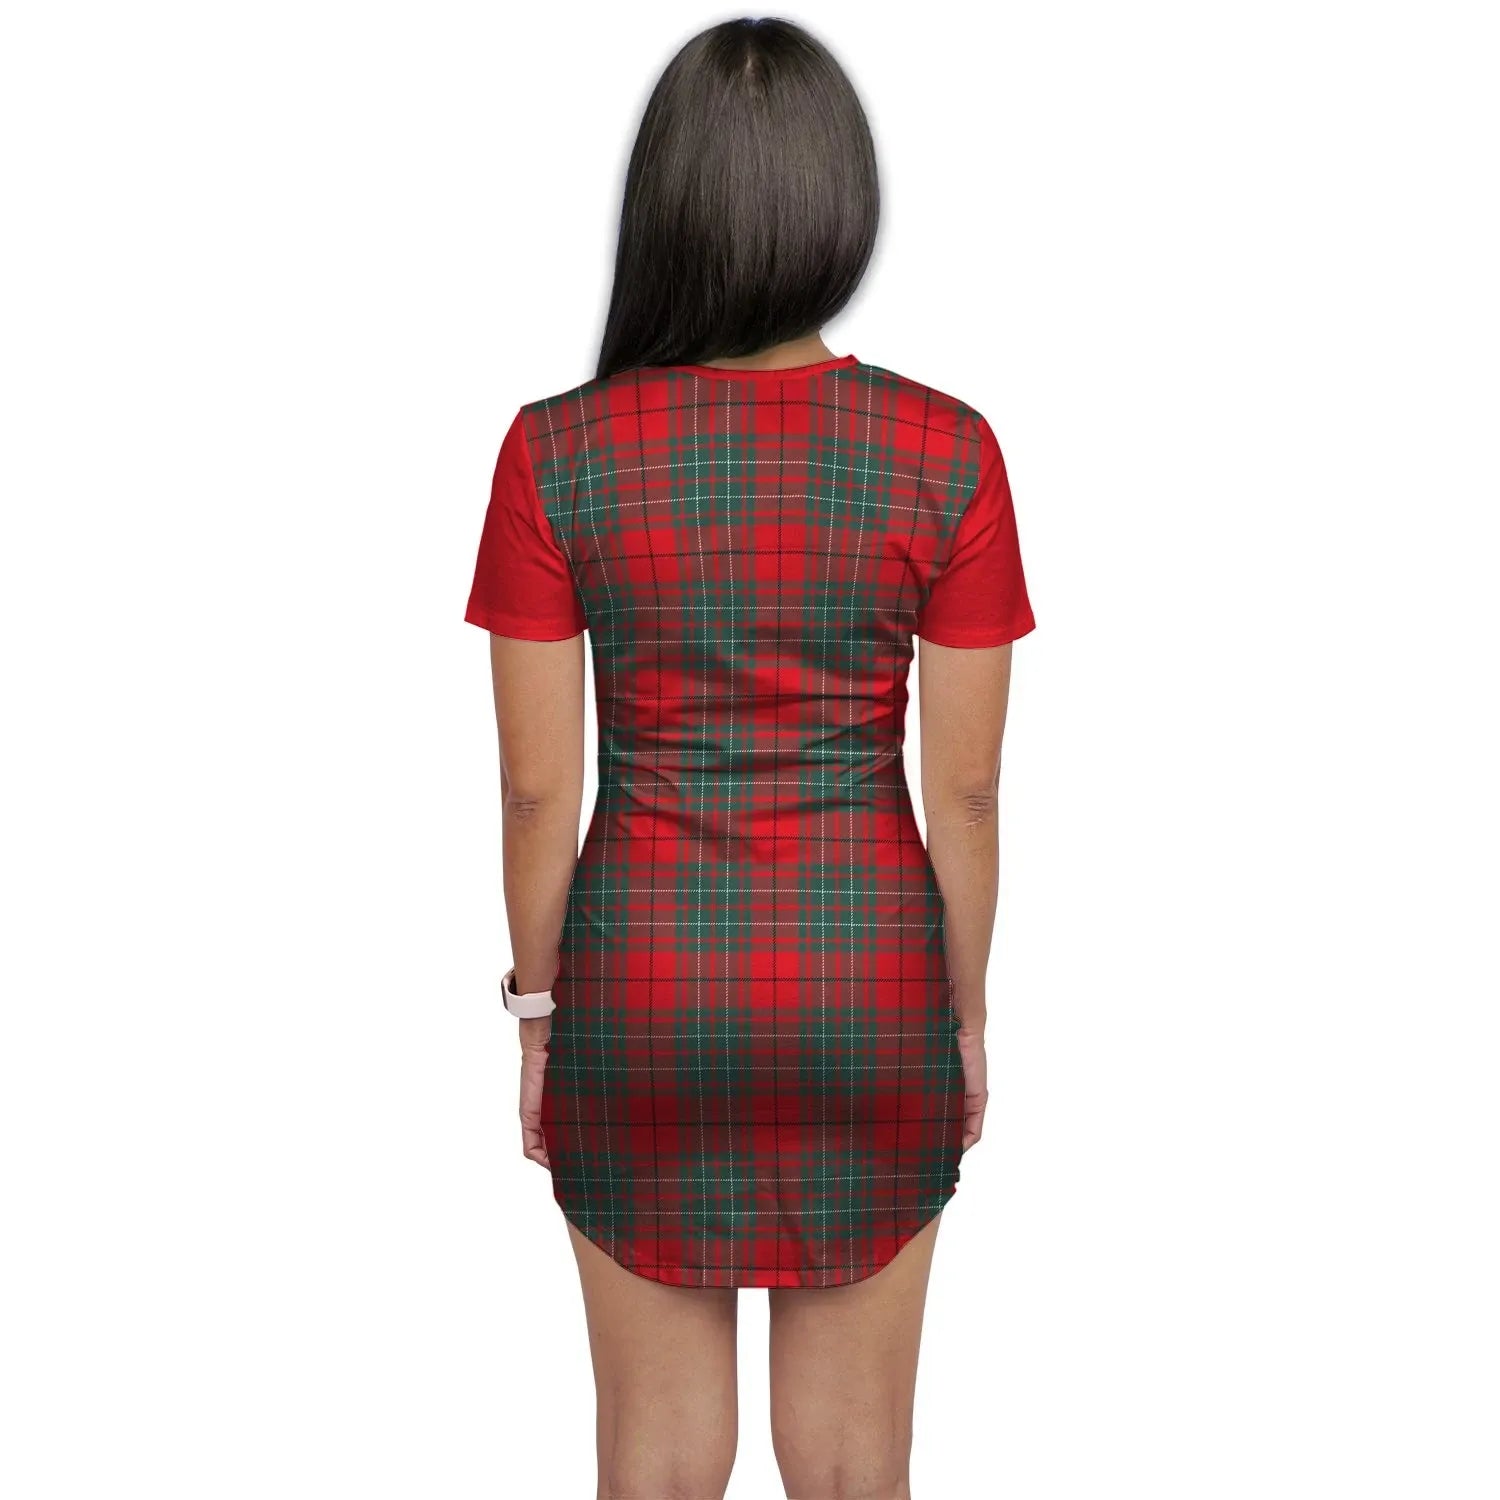 Cheyne Tartan Crest T-Shirt Dress